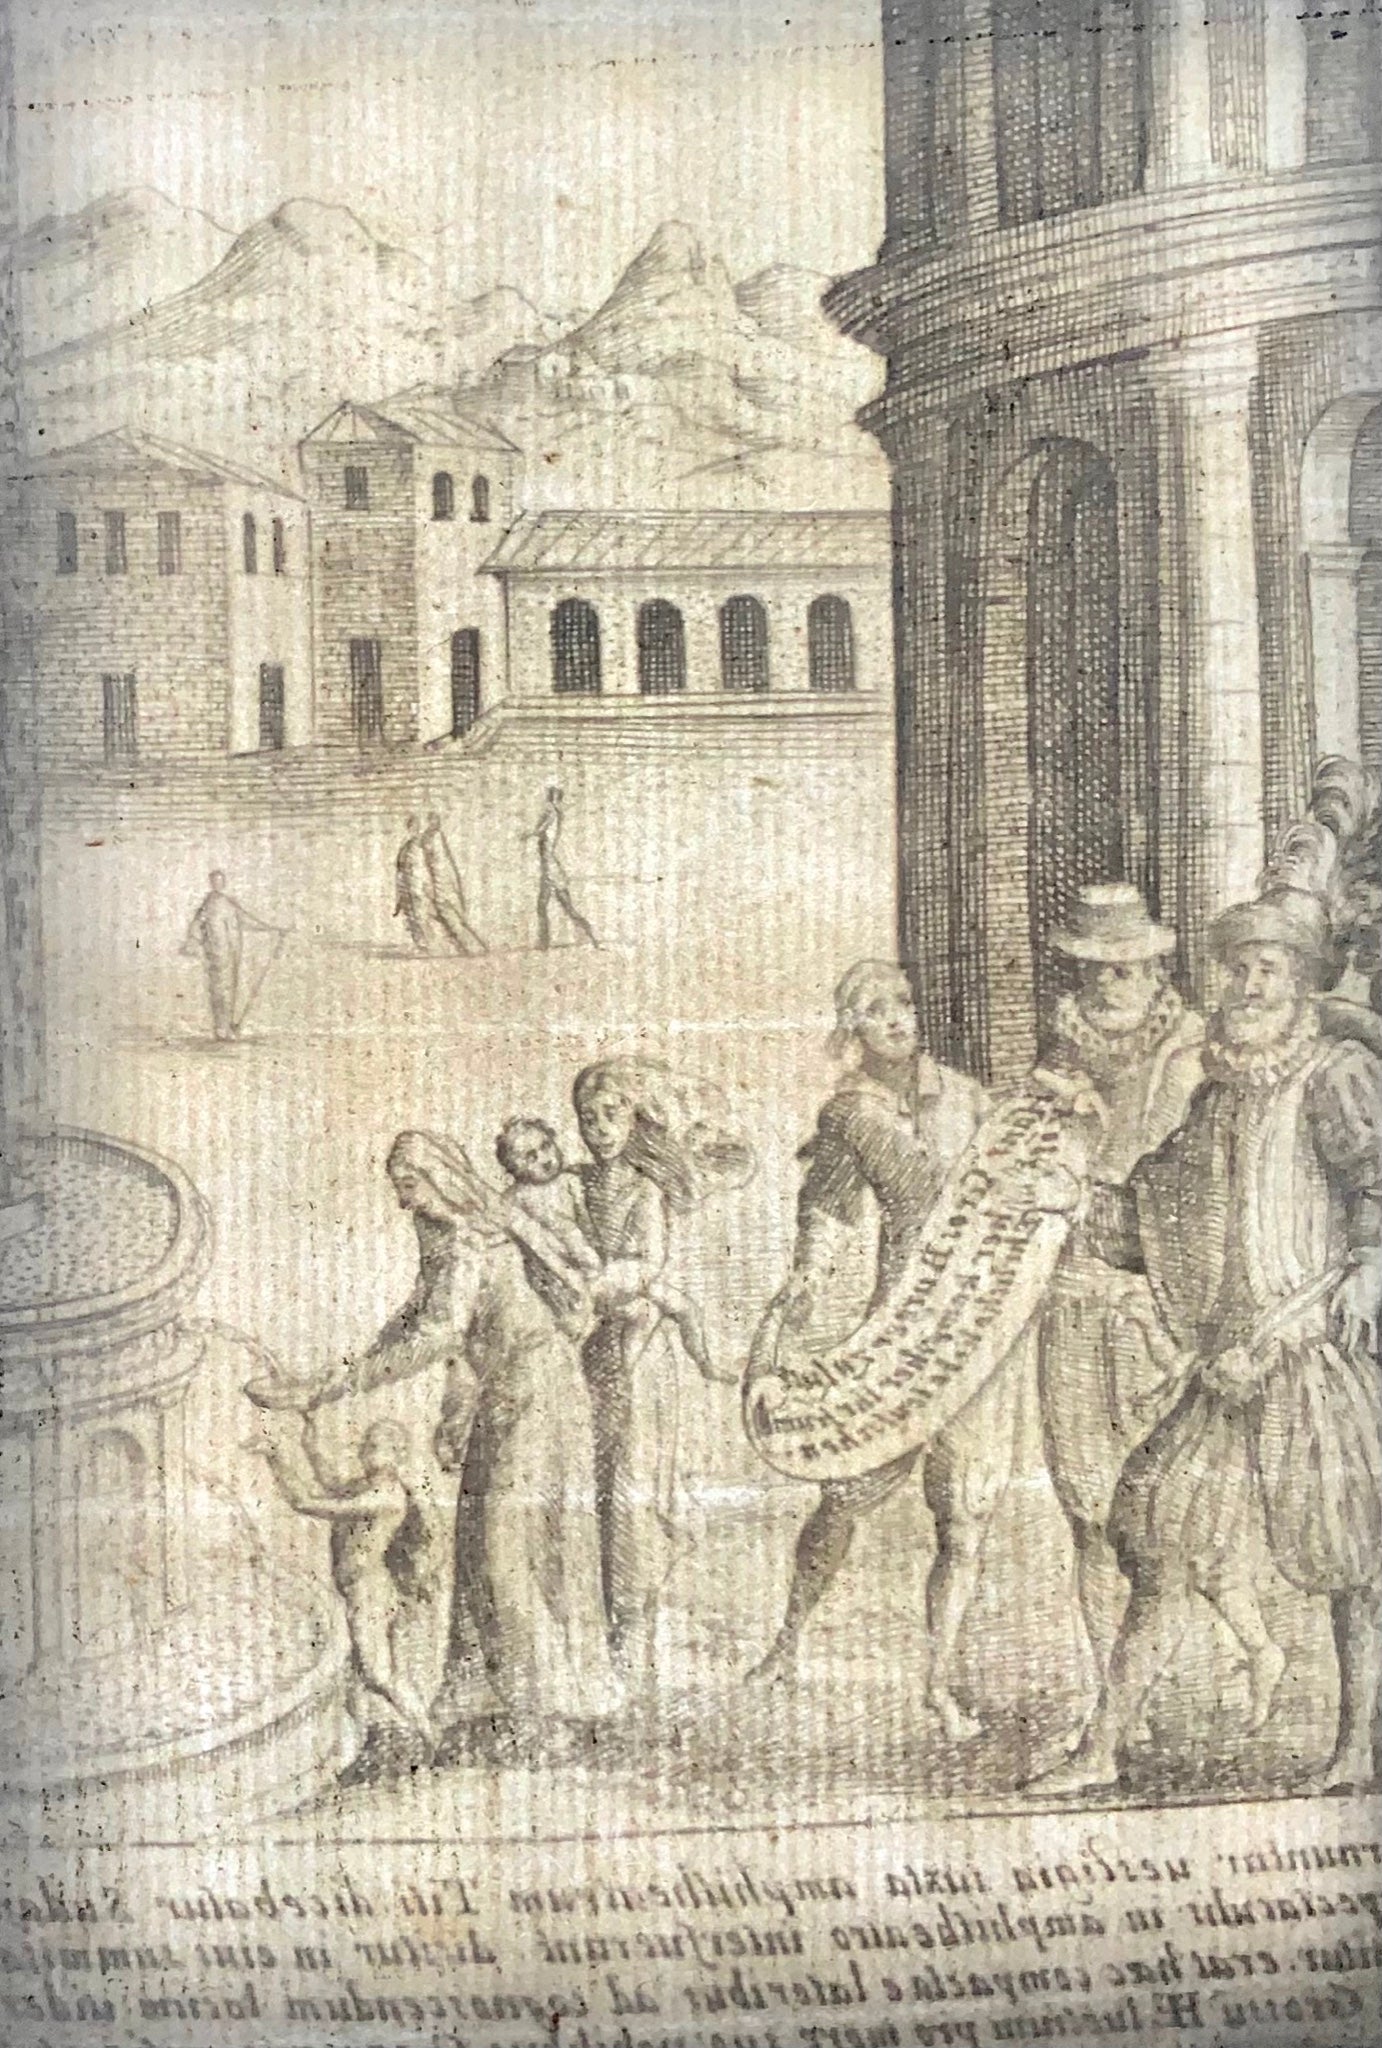 1624 Lauro, Meta Sudans, near Colosseum, Rome Italy, Copper engraving